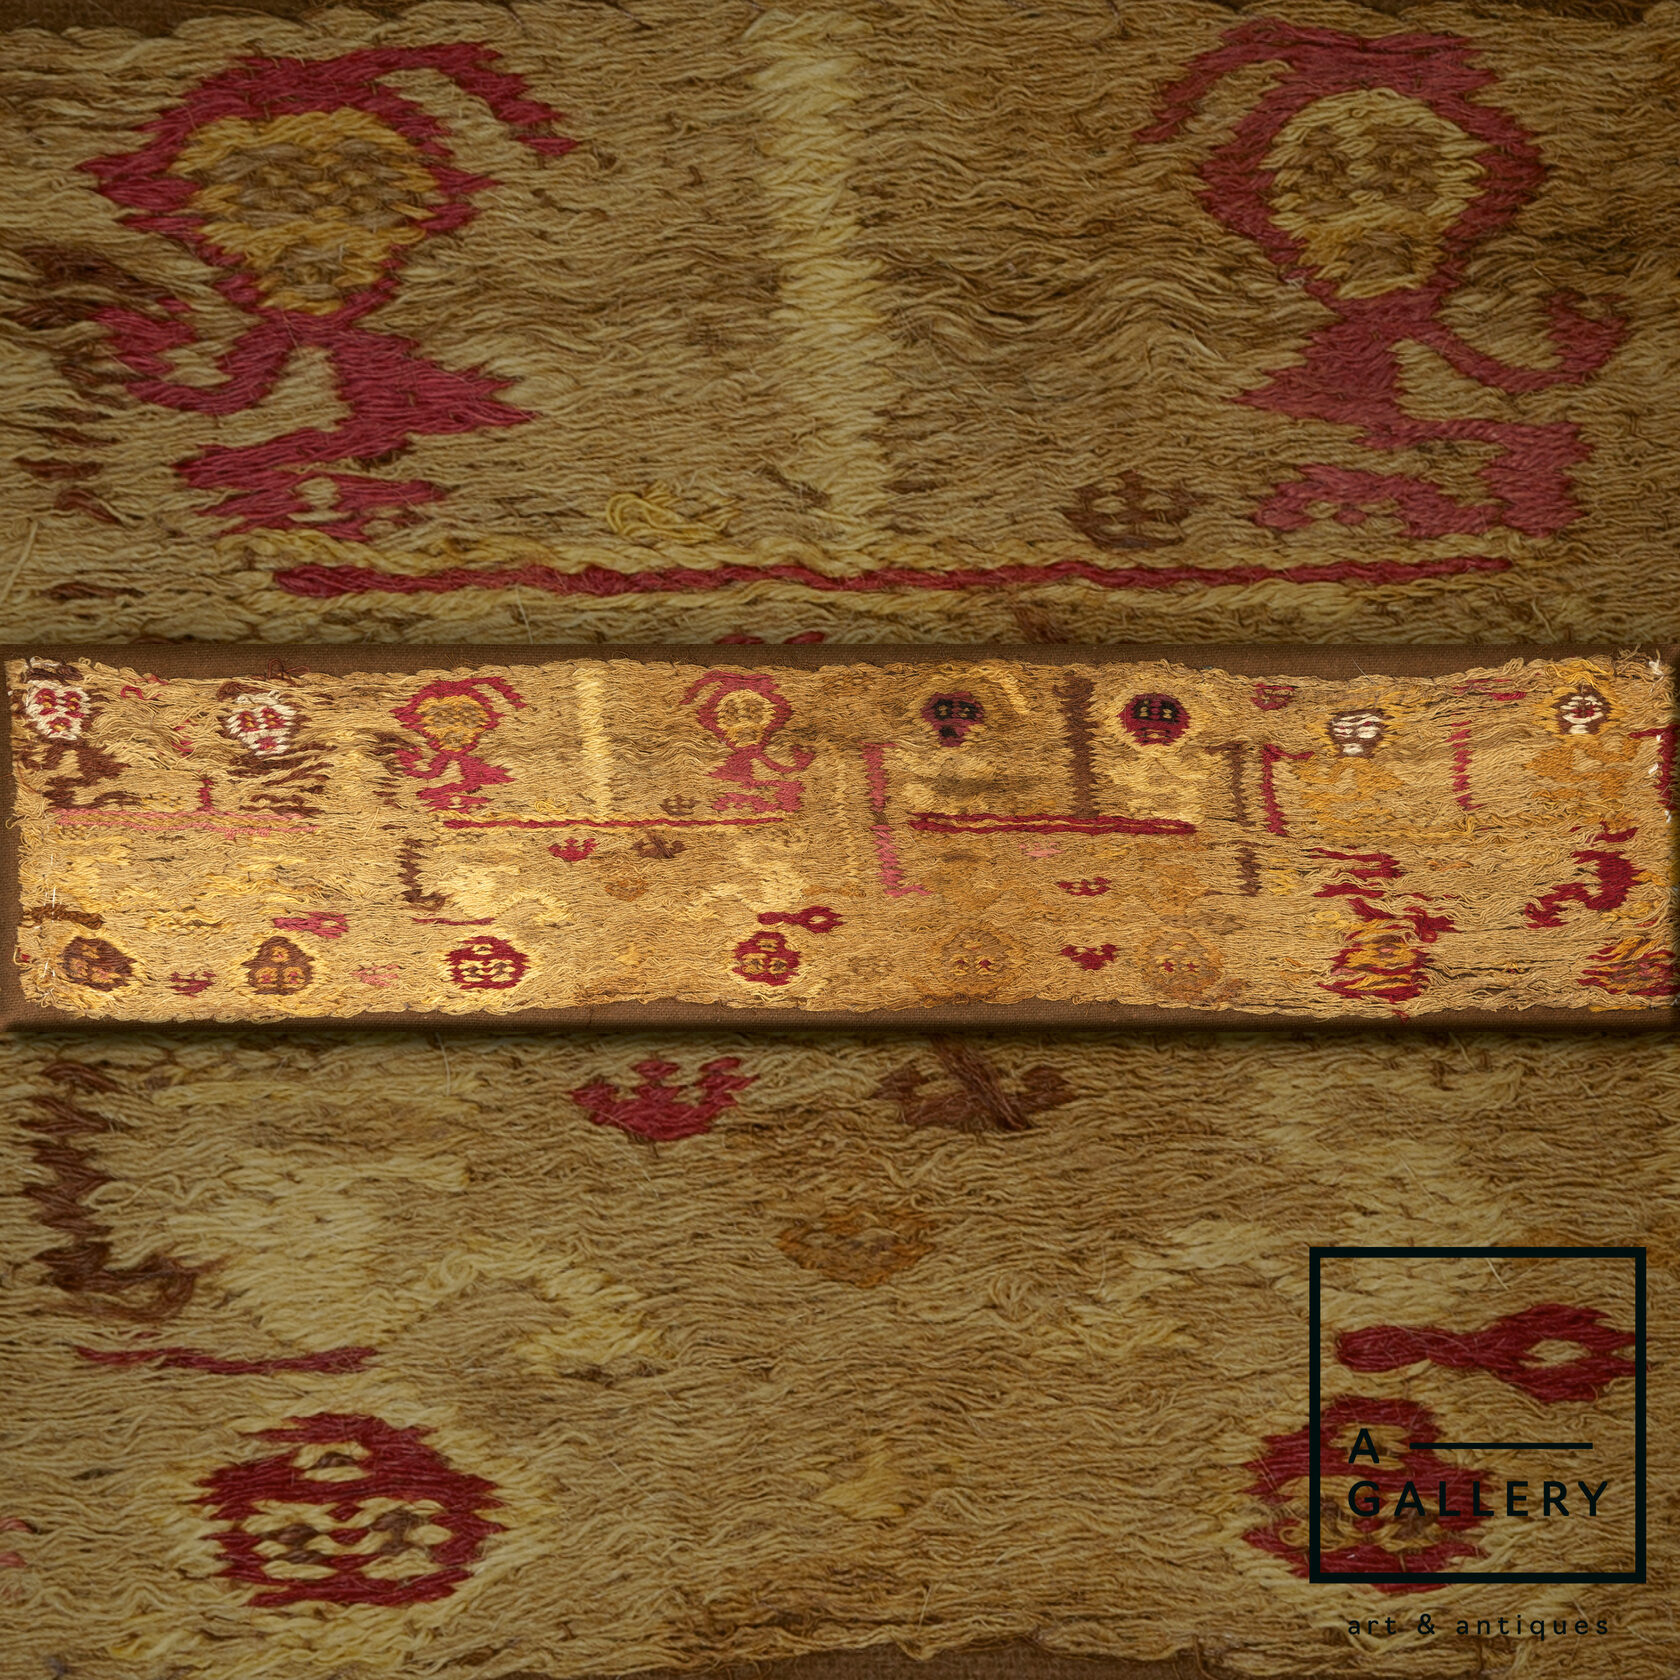 Ткань. Культура Чанкай, 1100-1400 гг. н.э. Коллекция A-Gallery, Москва.